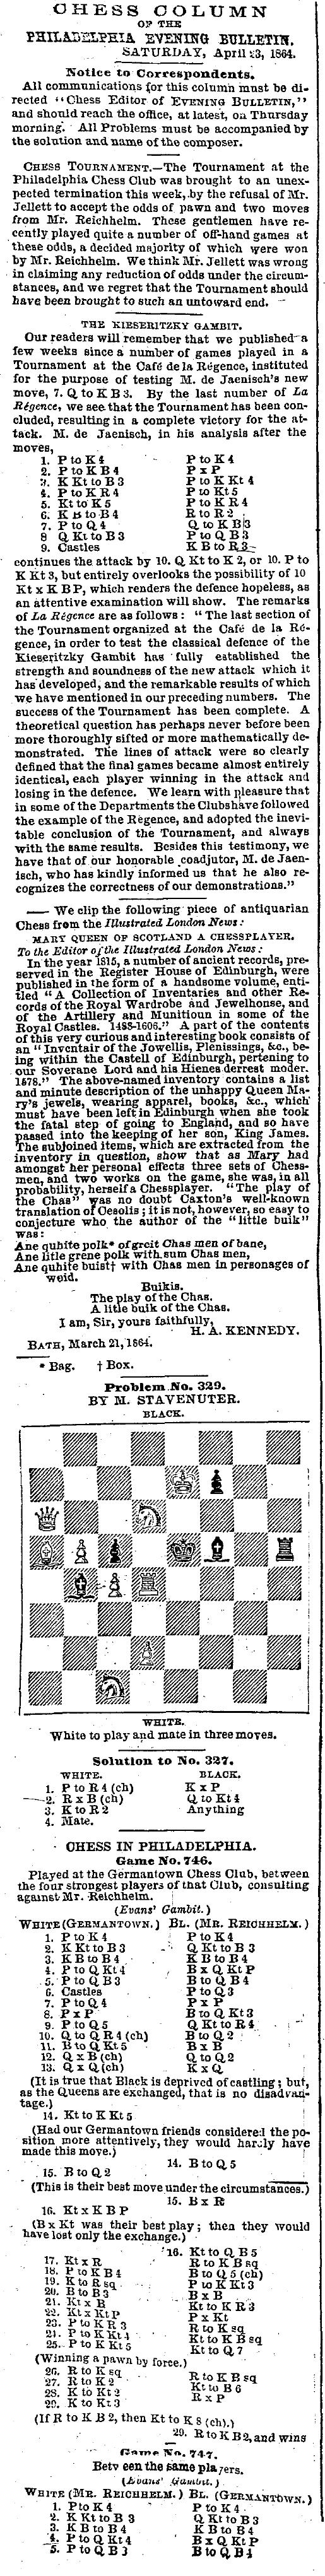 1864.04.23-01 Philadelphia Daily Evening Bulletin.jpg